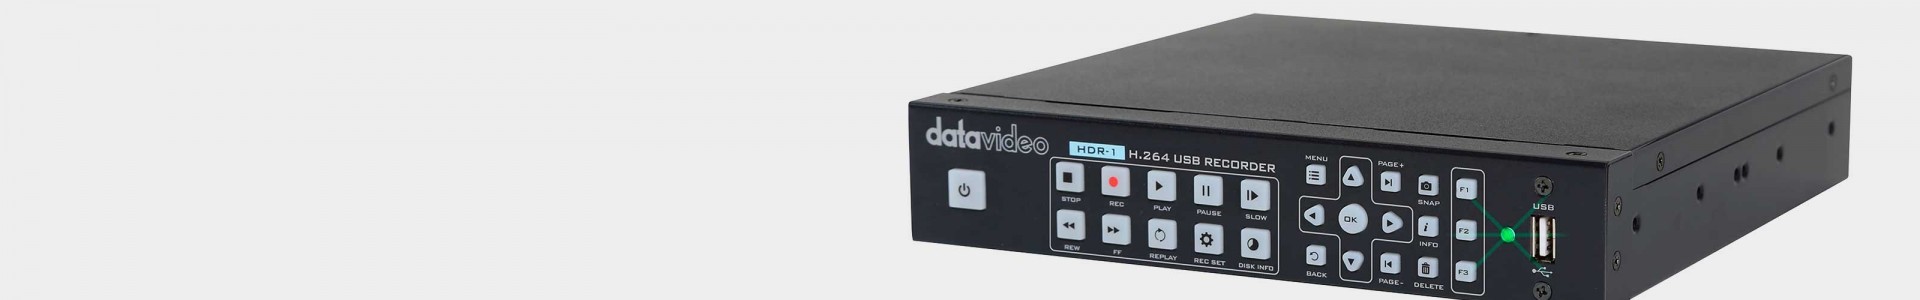 Grabadores Datavideo